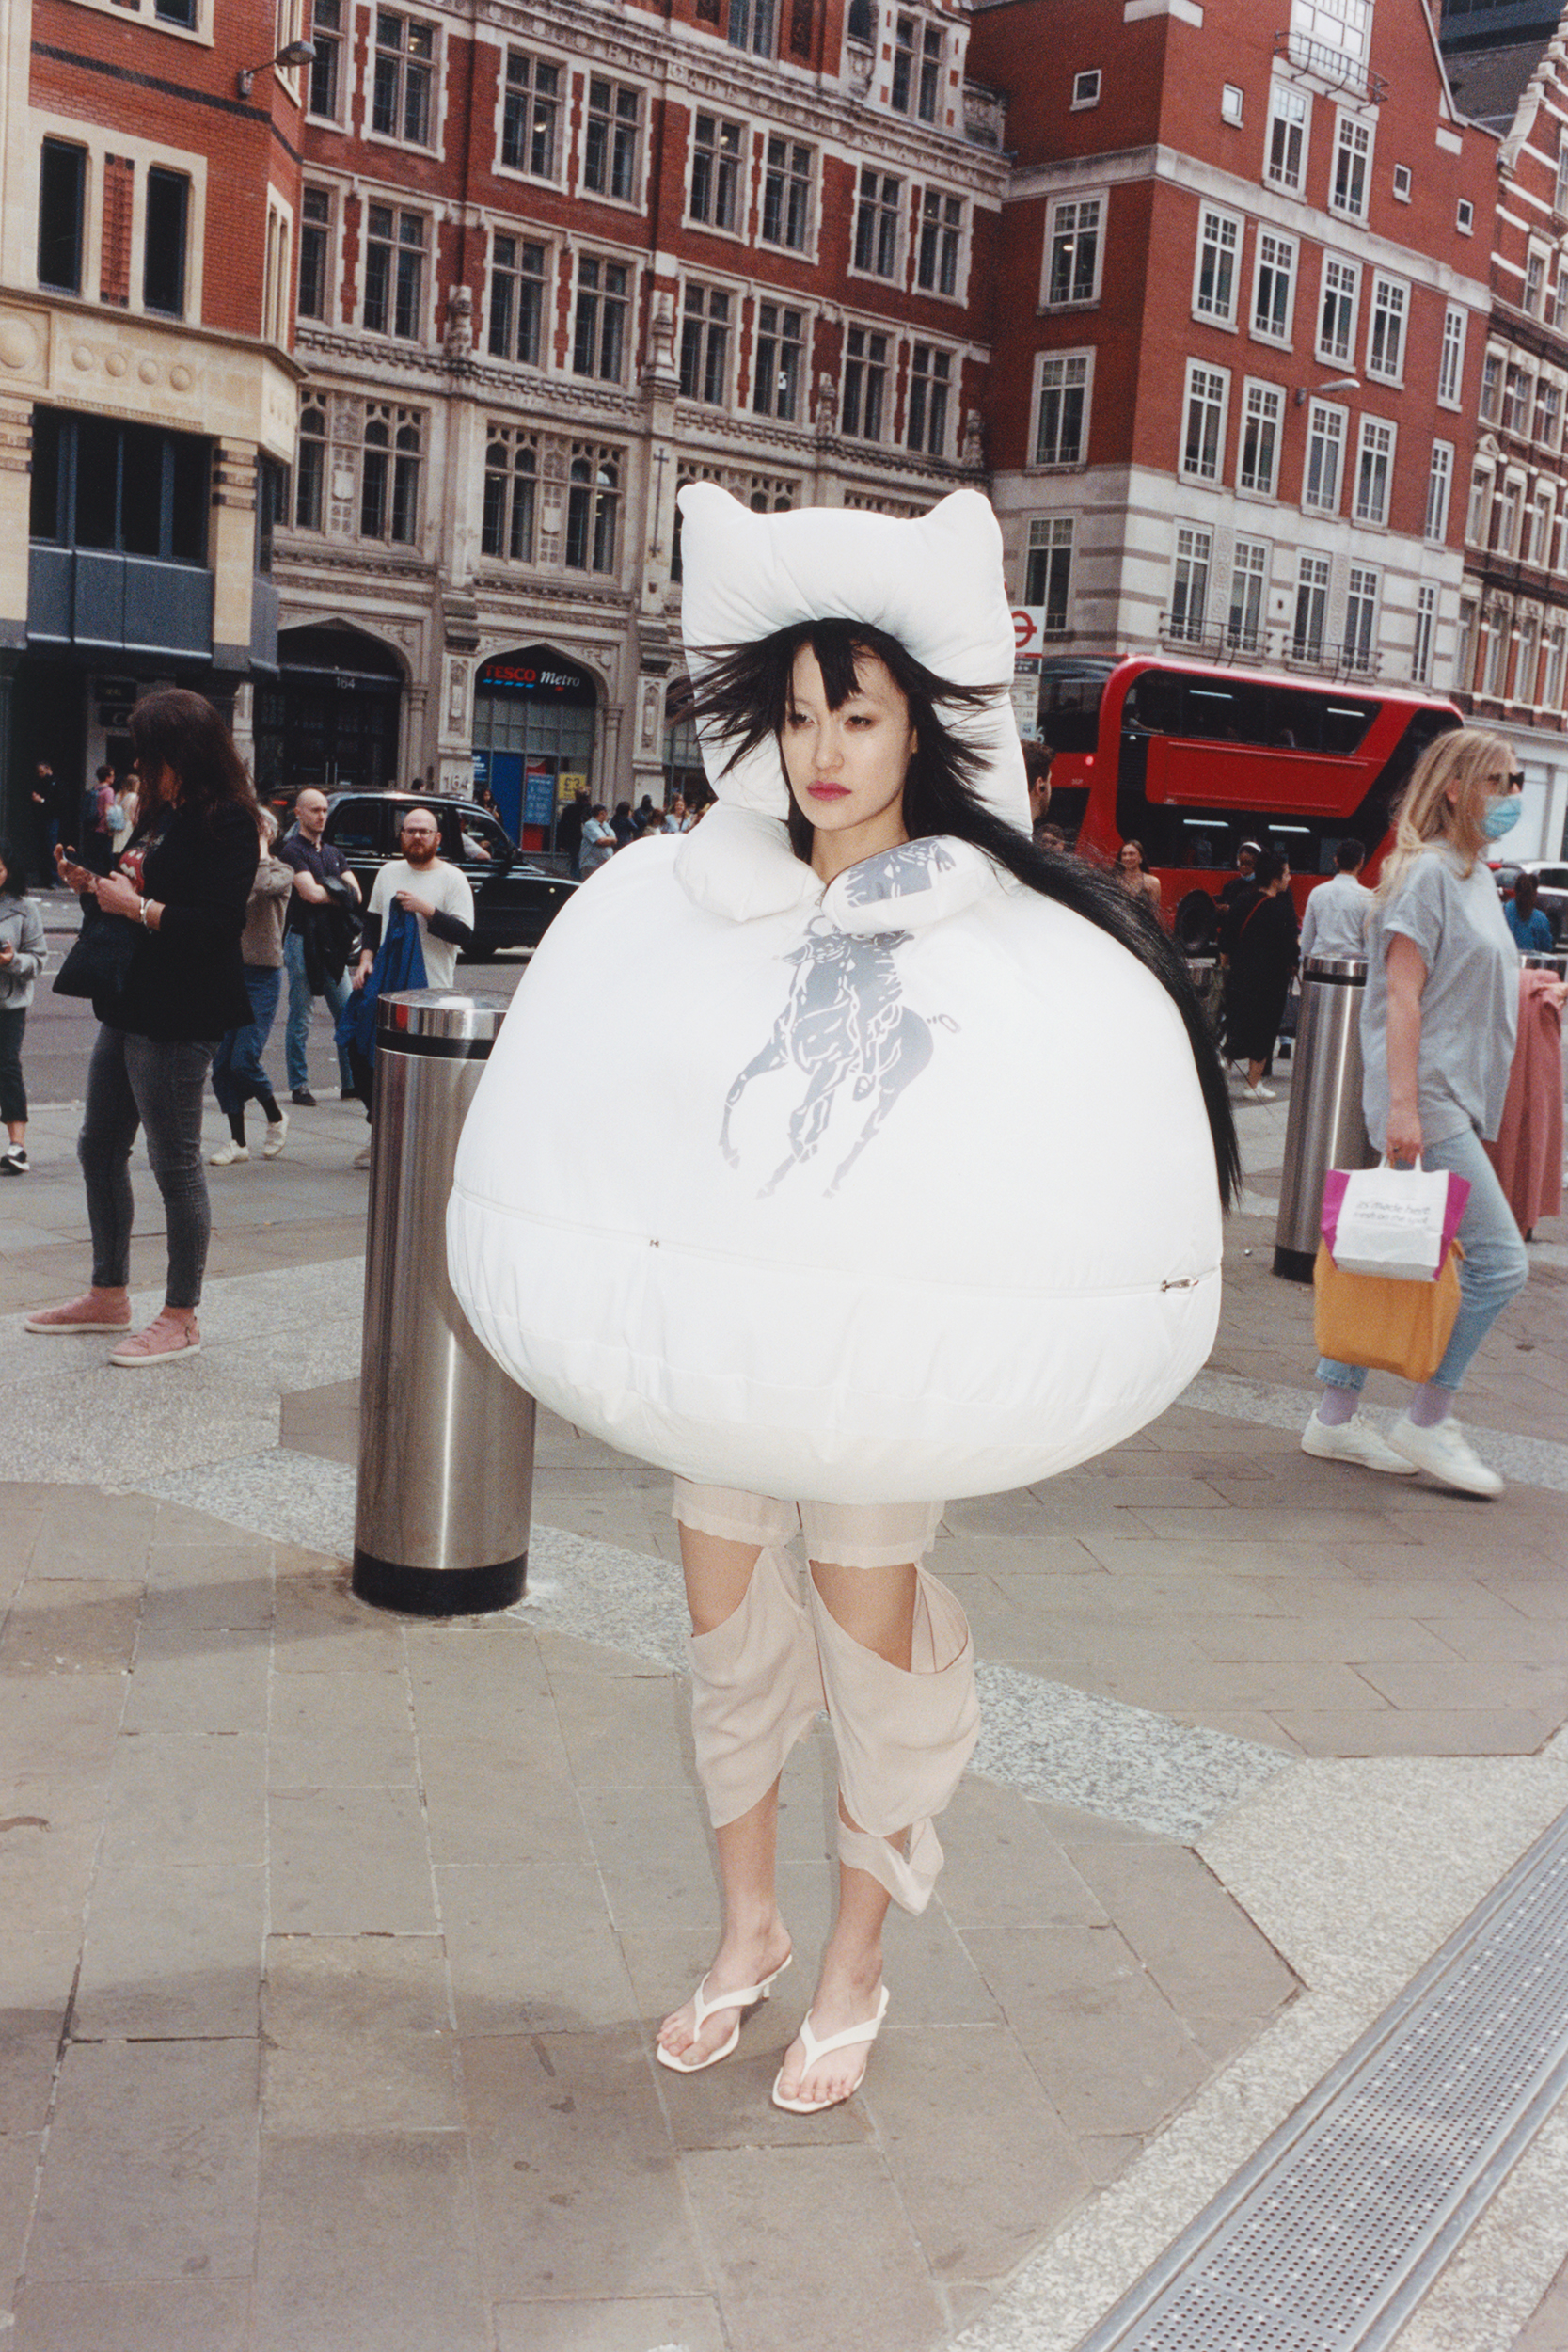 a woman walking through london wearing an inflatable dress by Fey Fey